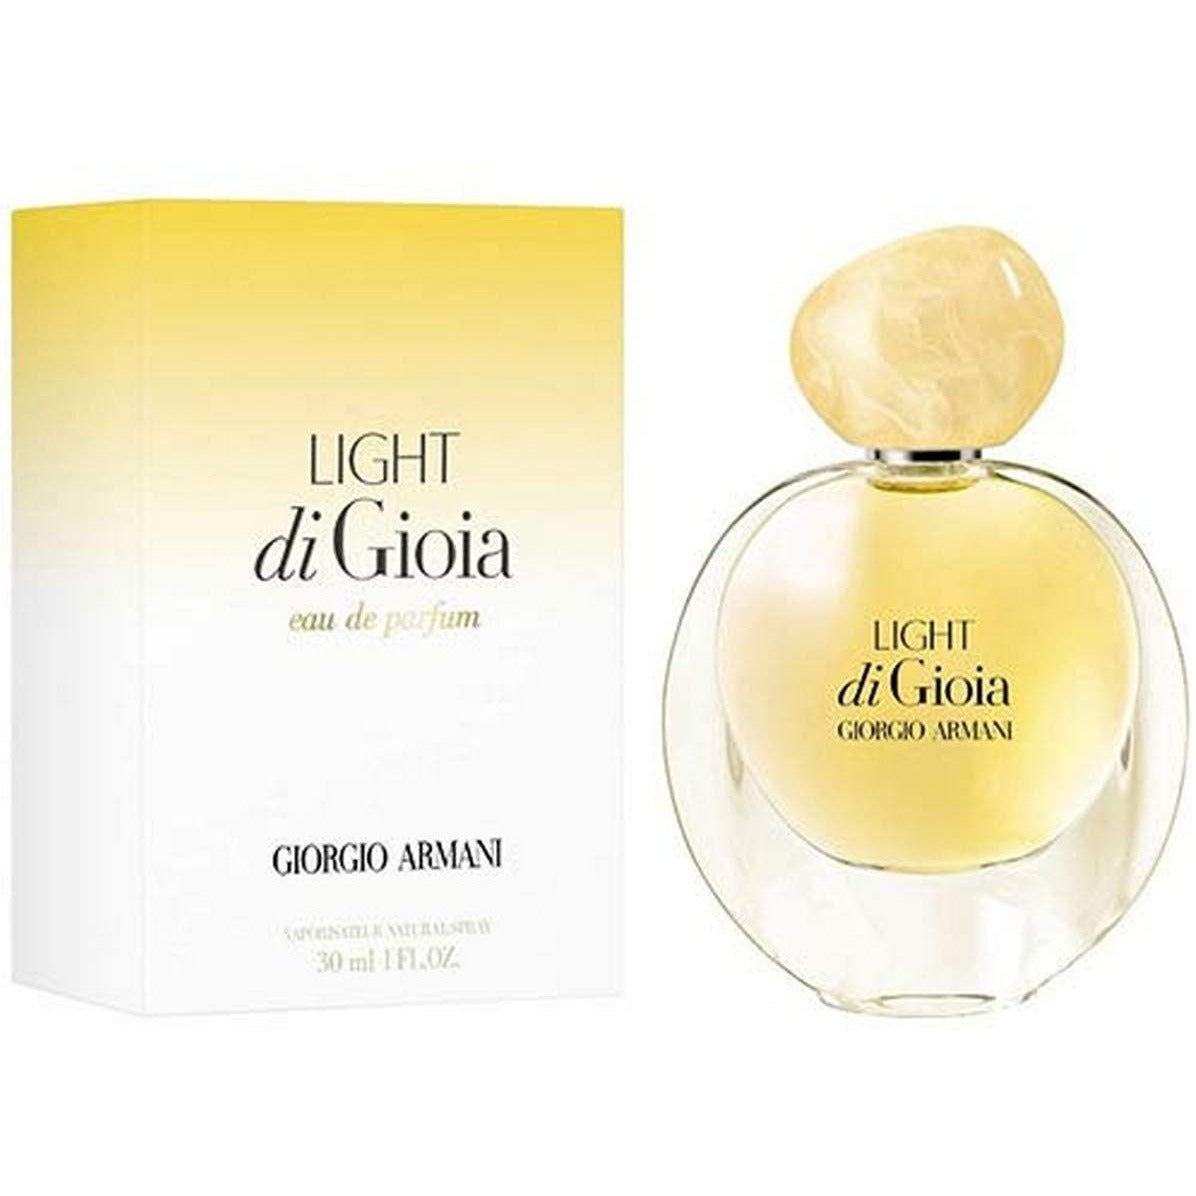    light-gioia-armani-perfume